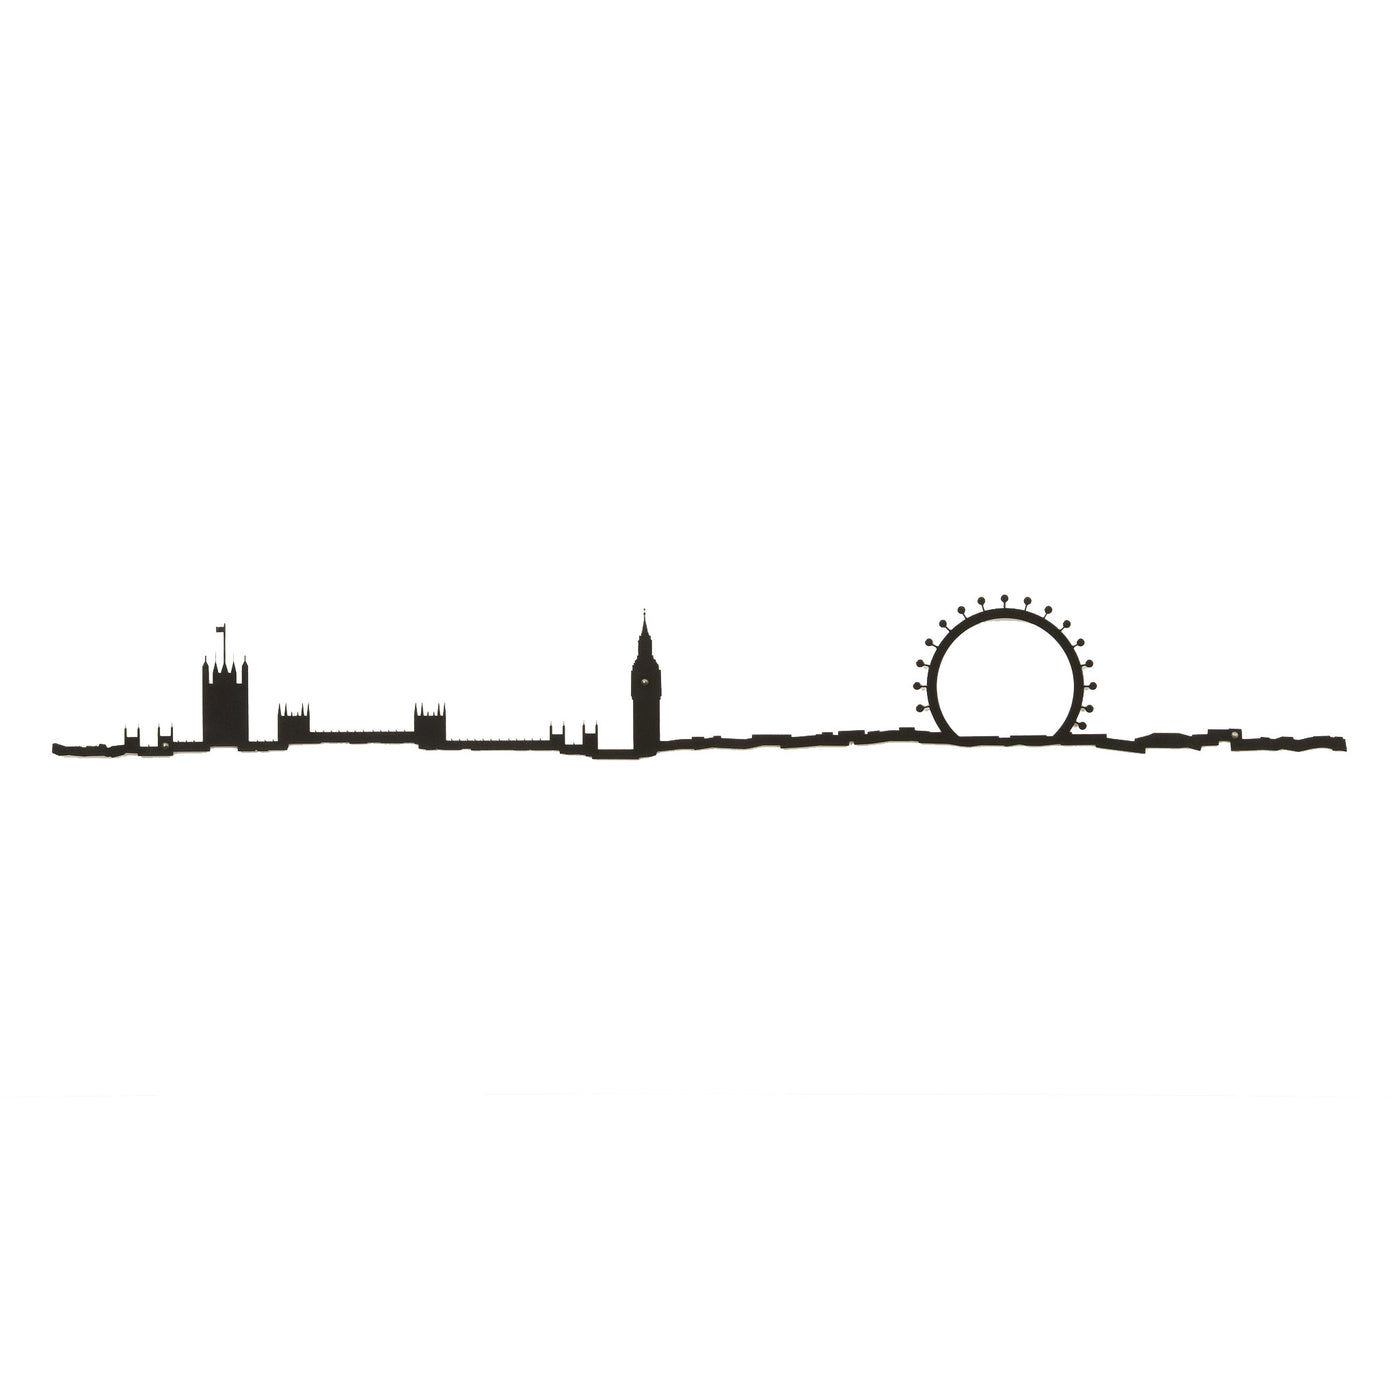 49.25” XL City Skyline Silhouette - London by The Line